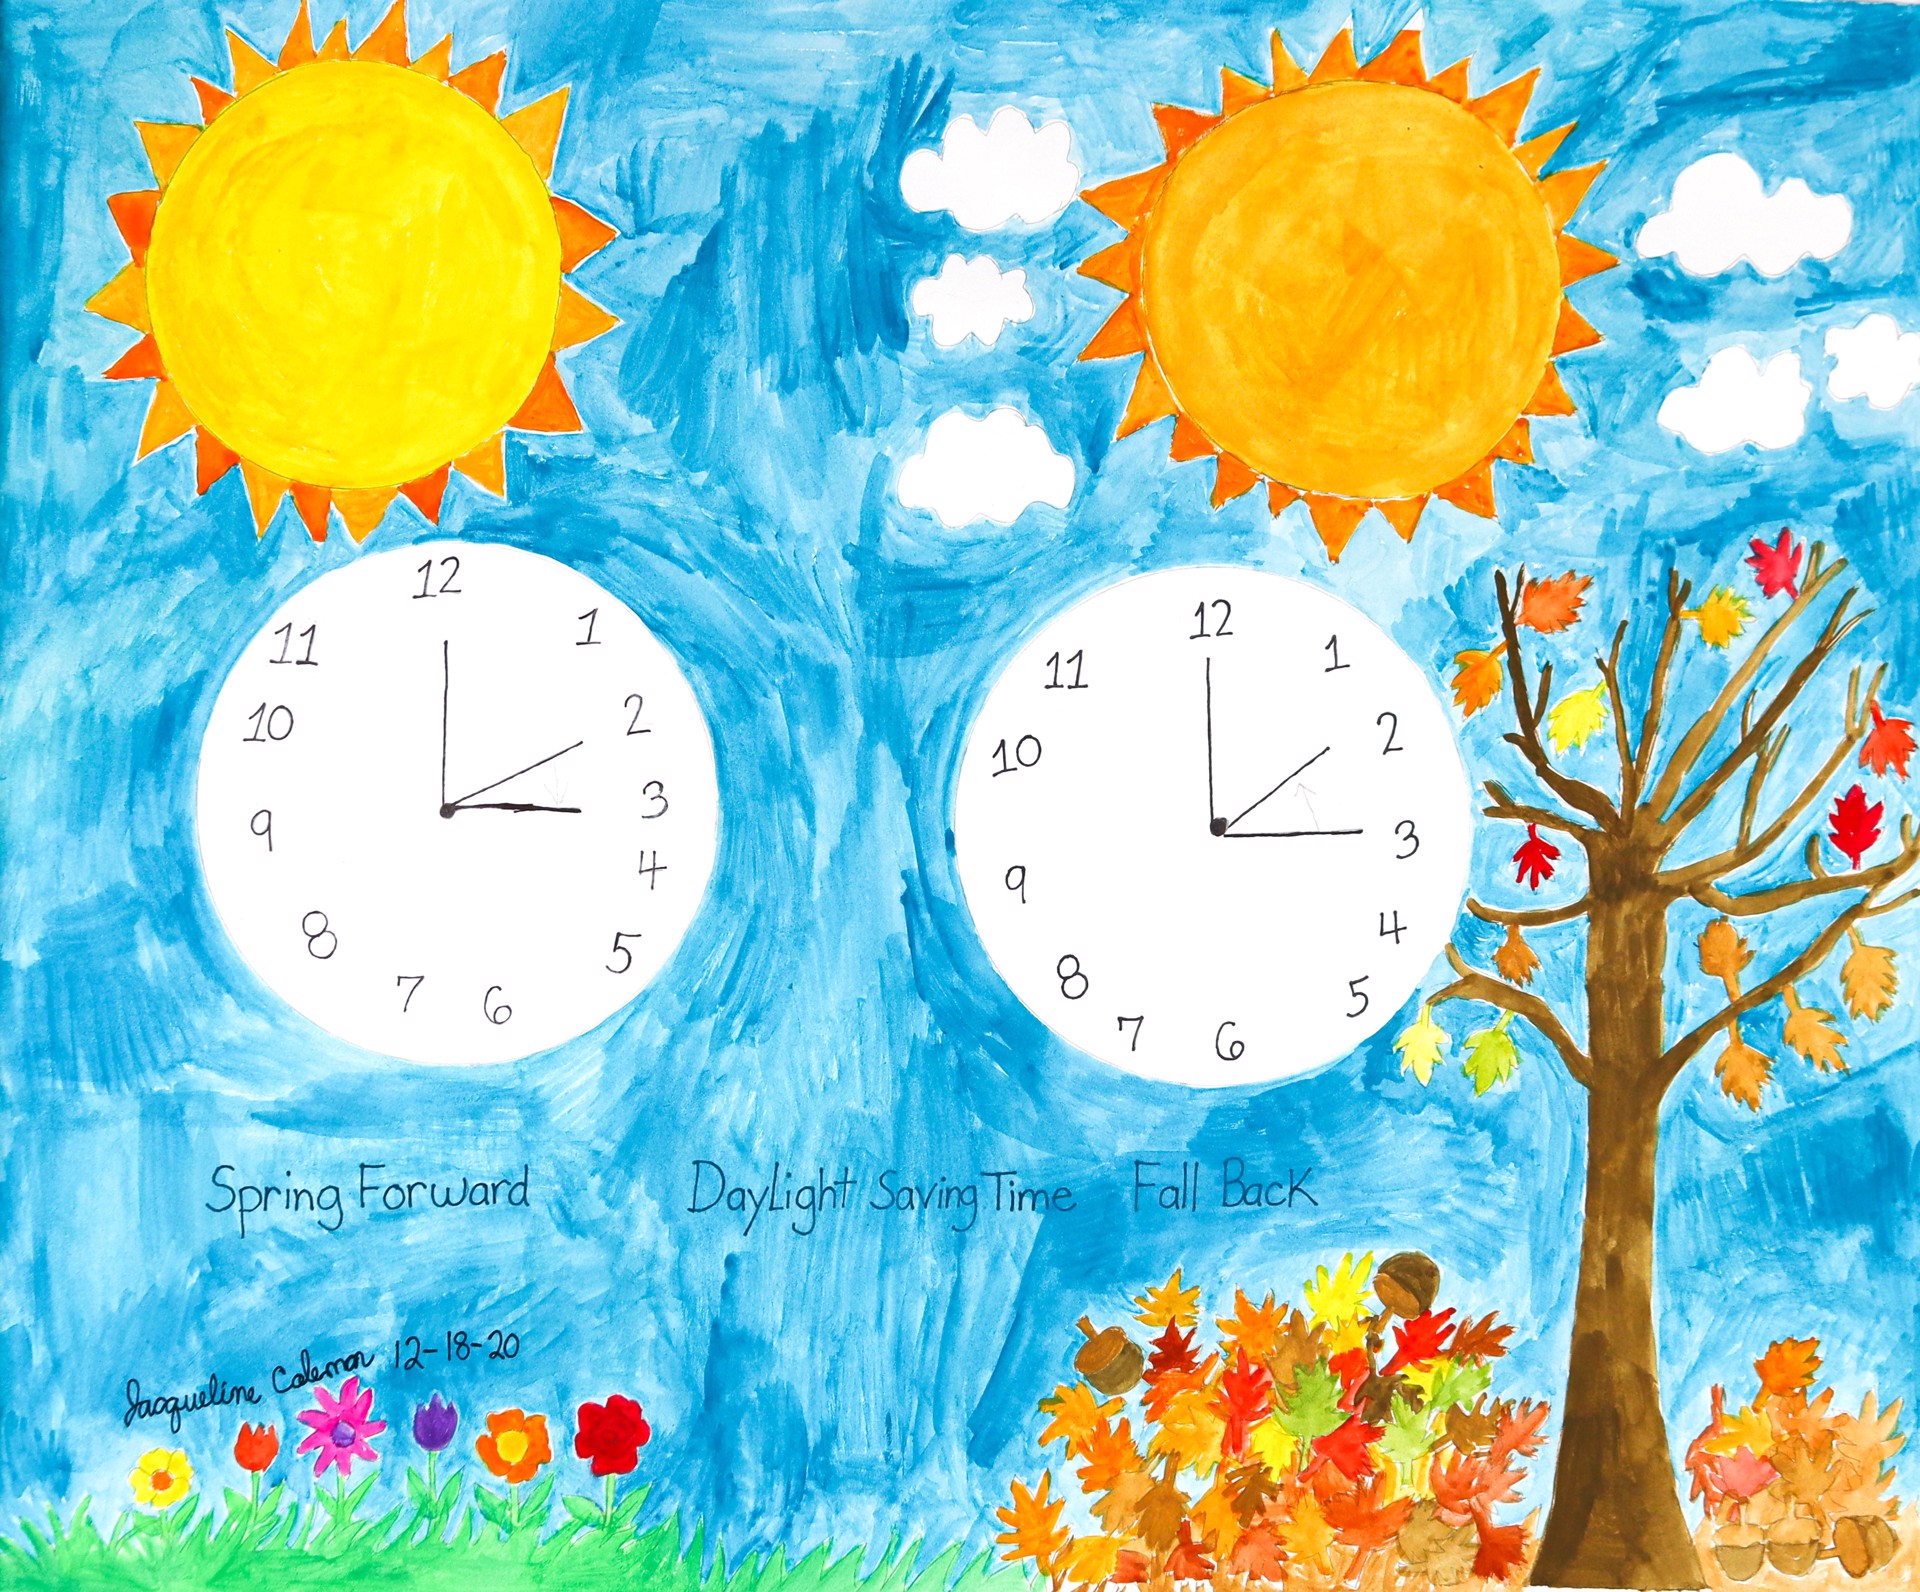 Daylight Saving Time 2  by Jacqueline Coleman